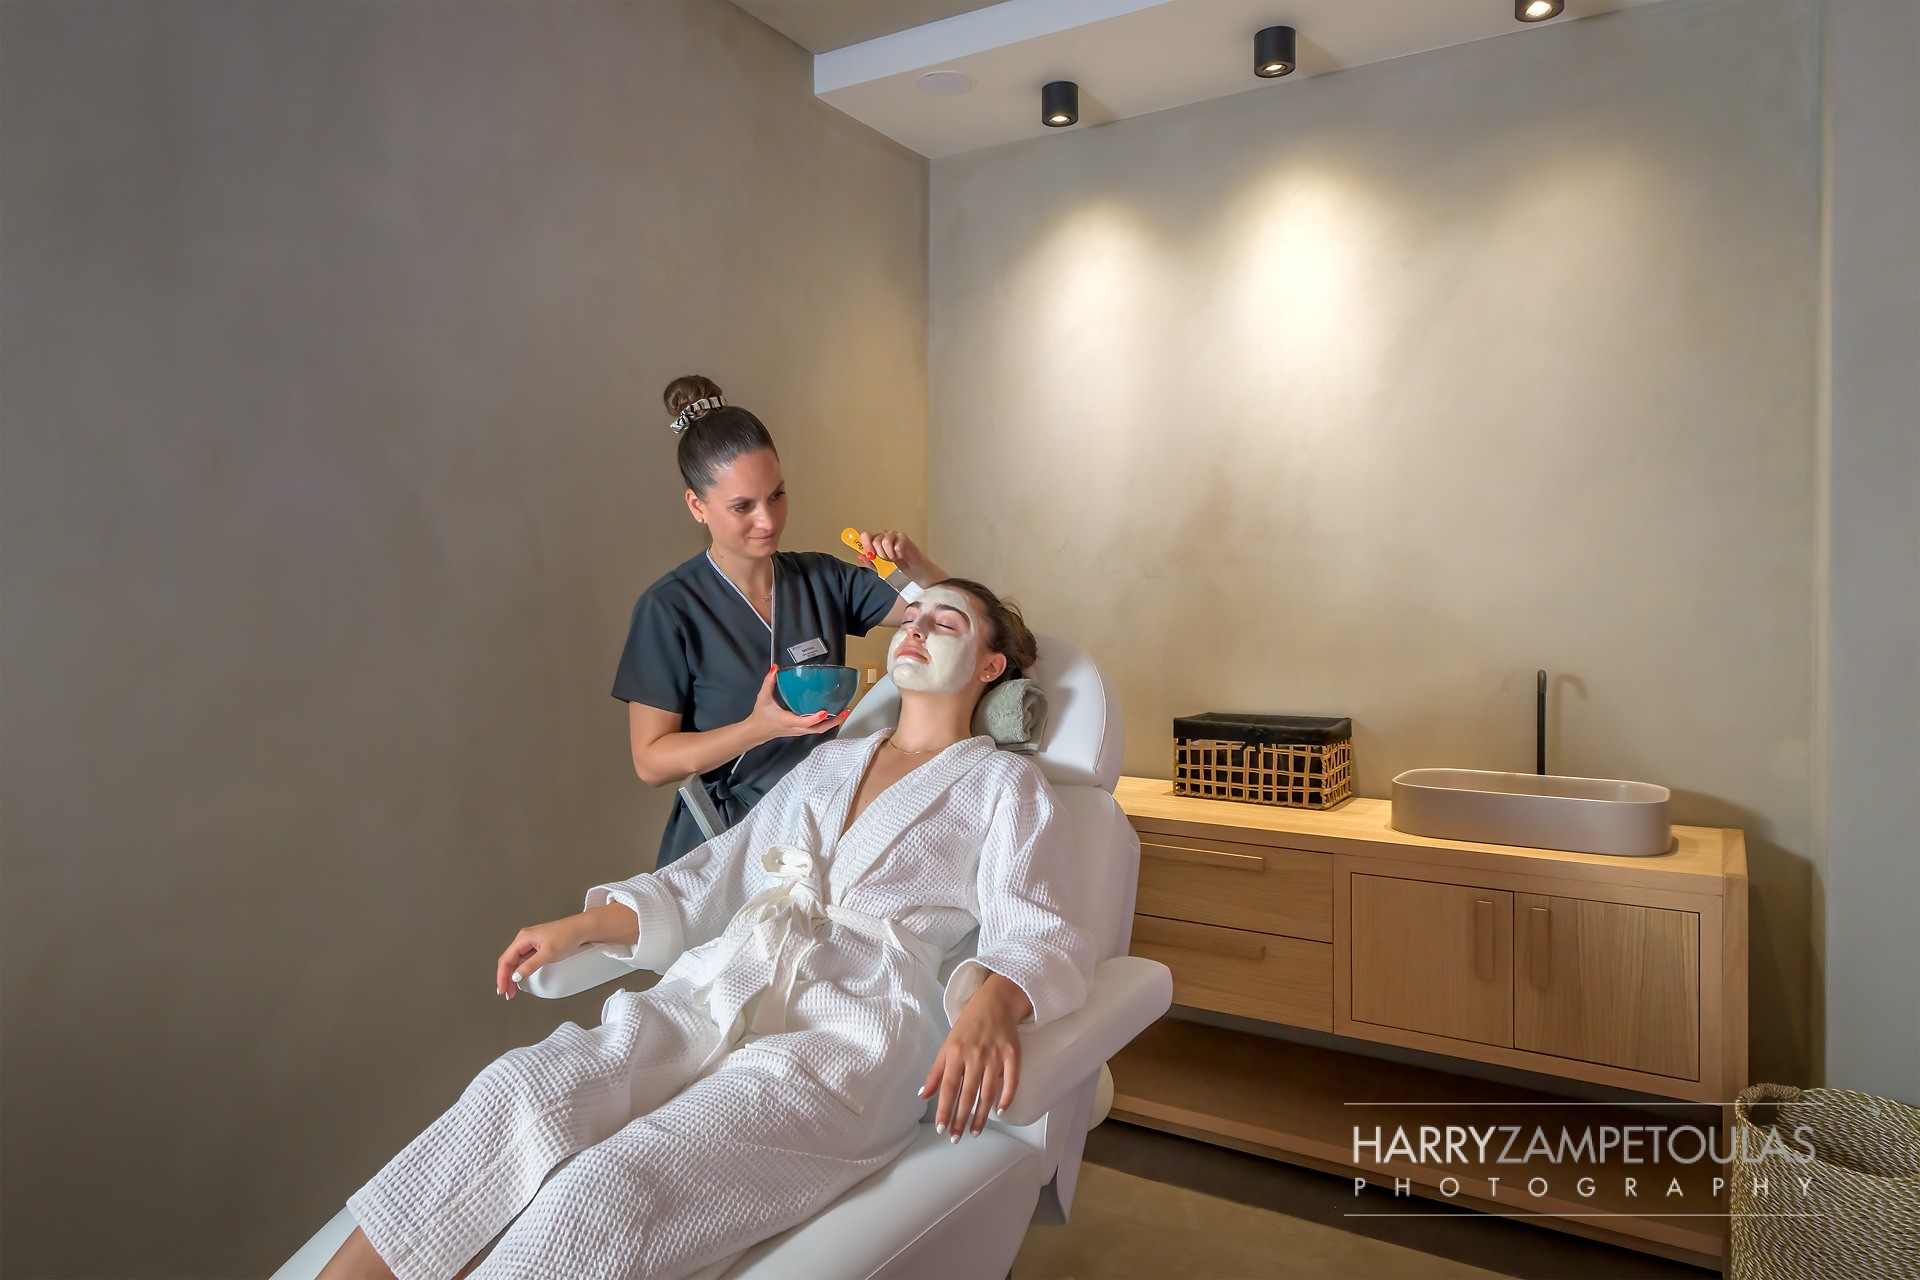 SPA-Treatment-Room-3 Porto Angeli Resort Hotel - Hotel Photography Harry Zampetoulas 